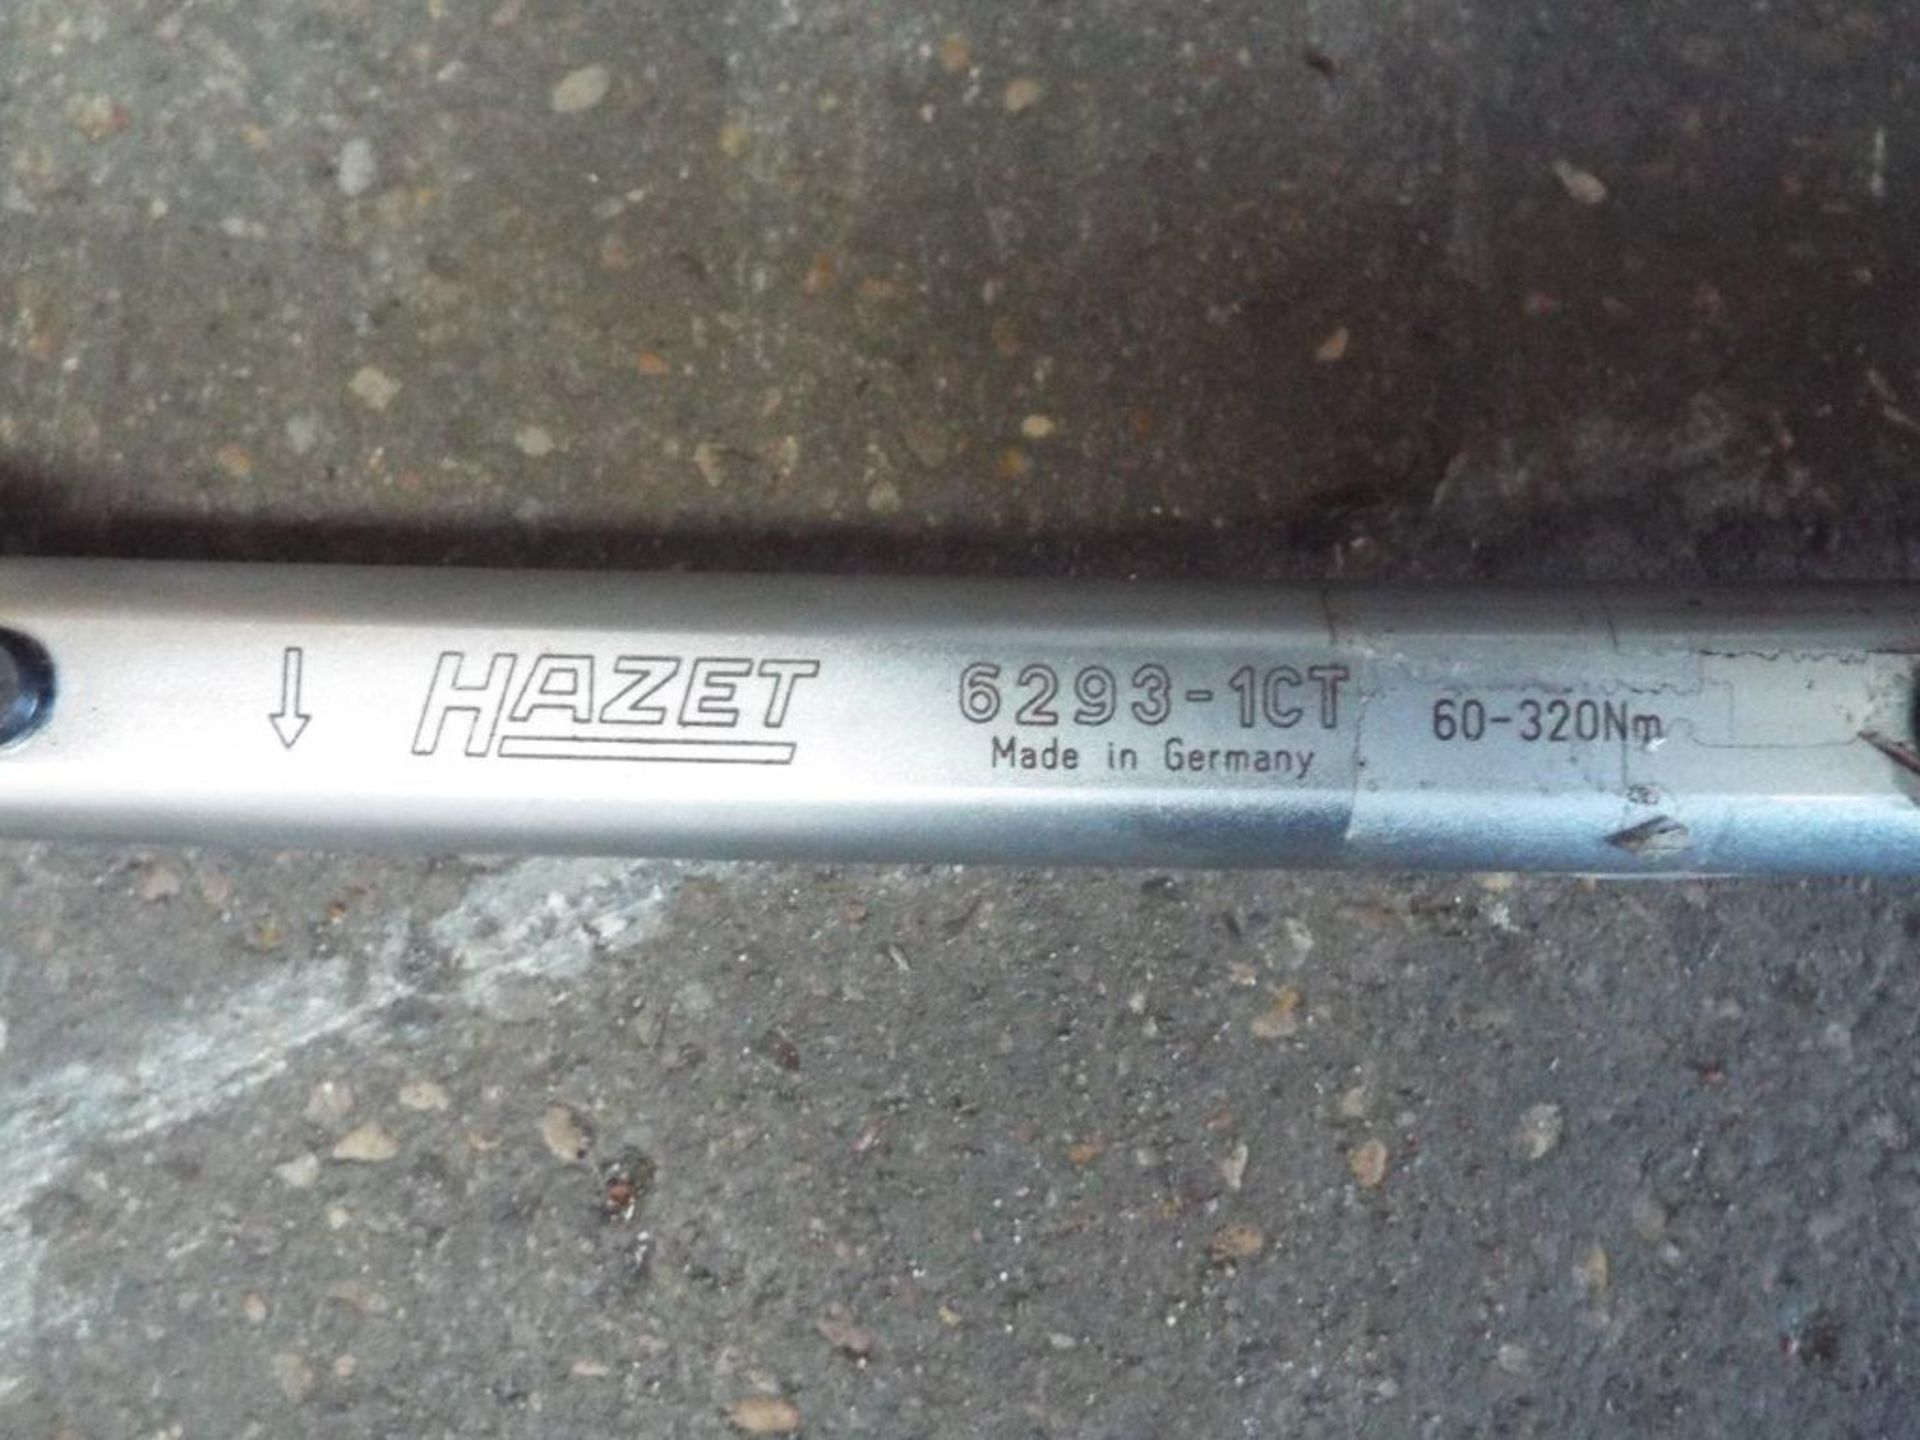 Hazet 6293-1CT Torque Wrench - Image 4 of 6